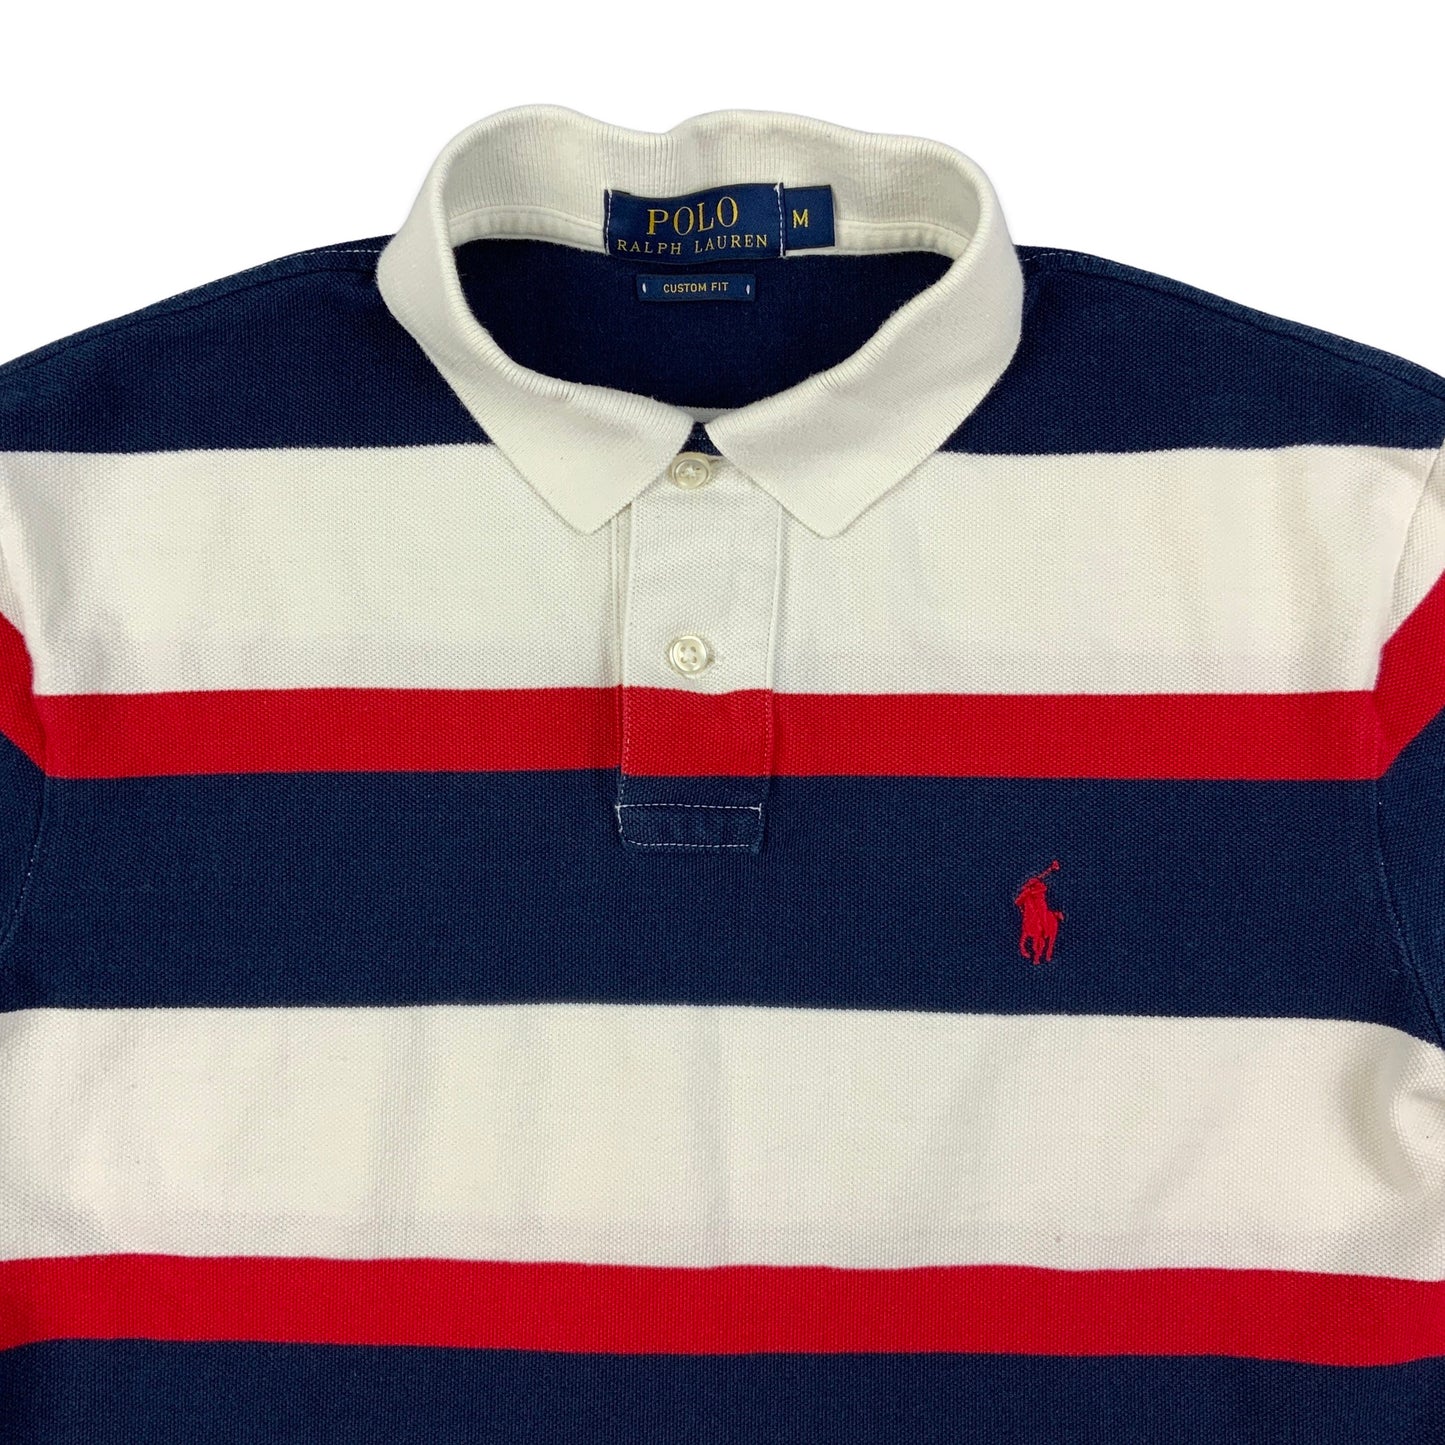 Ralph Lauren White Navy & Red Striped Polo Shirt XS S